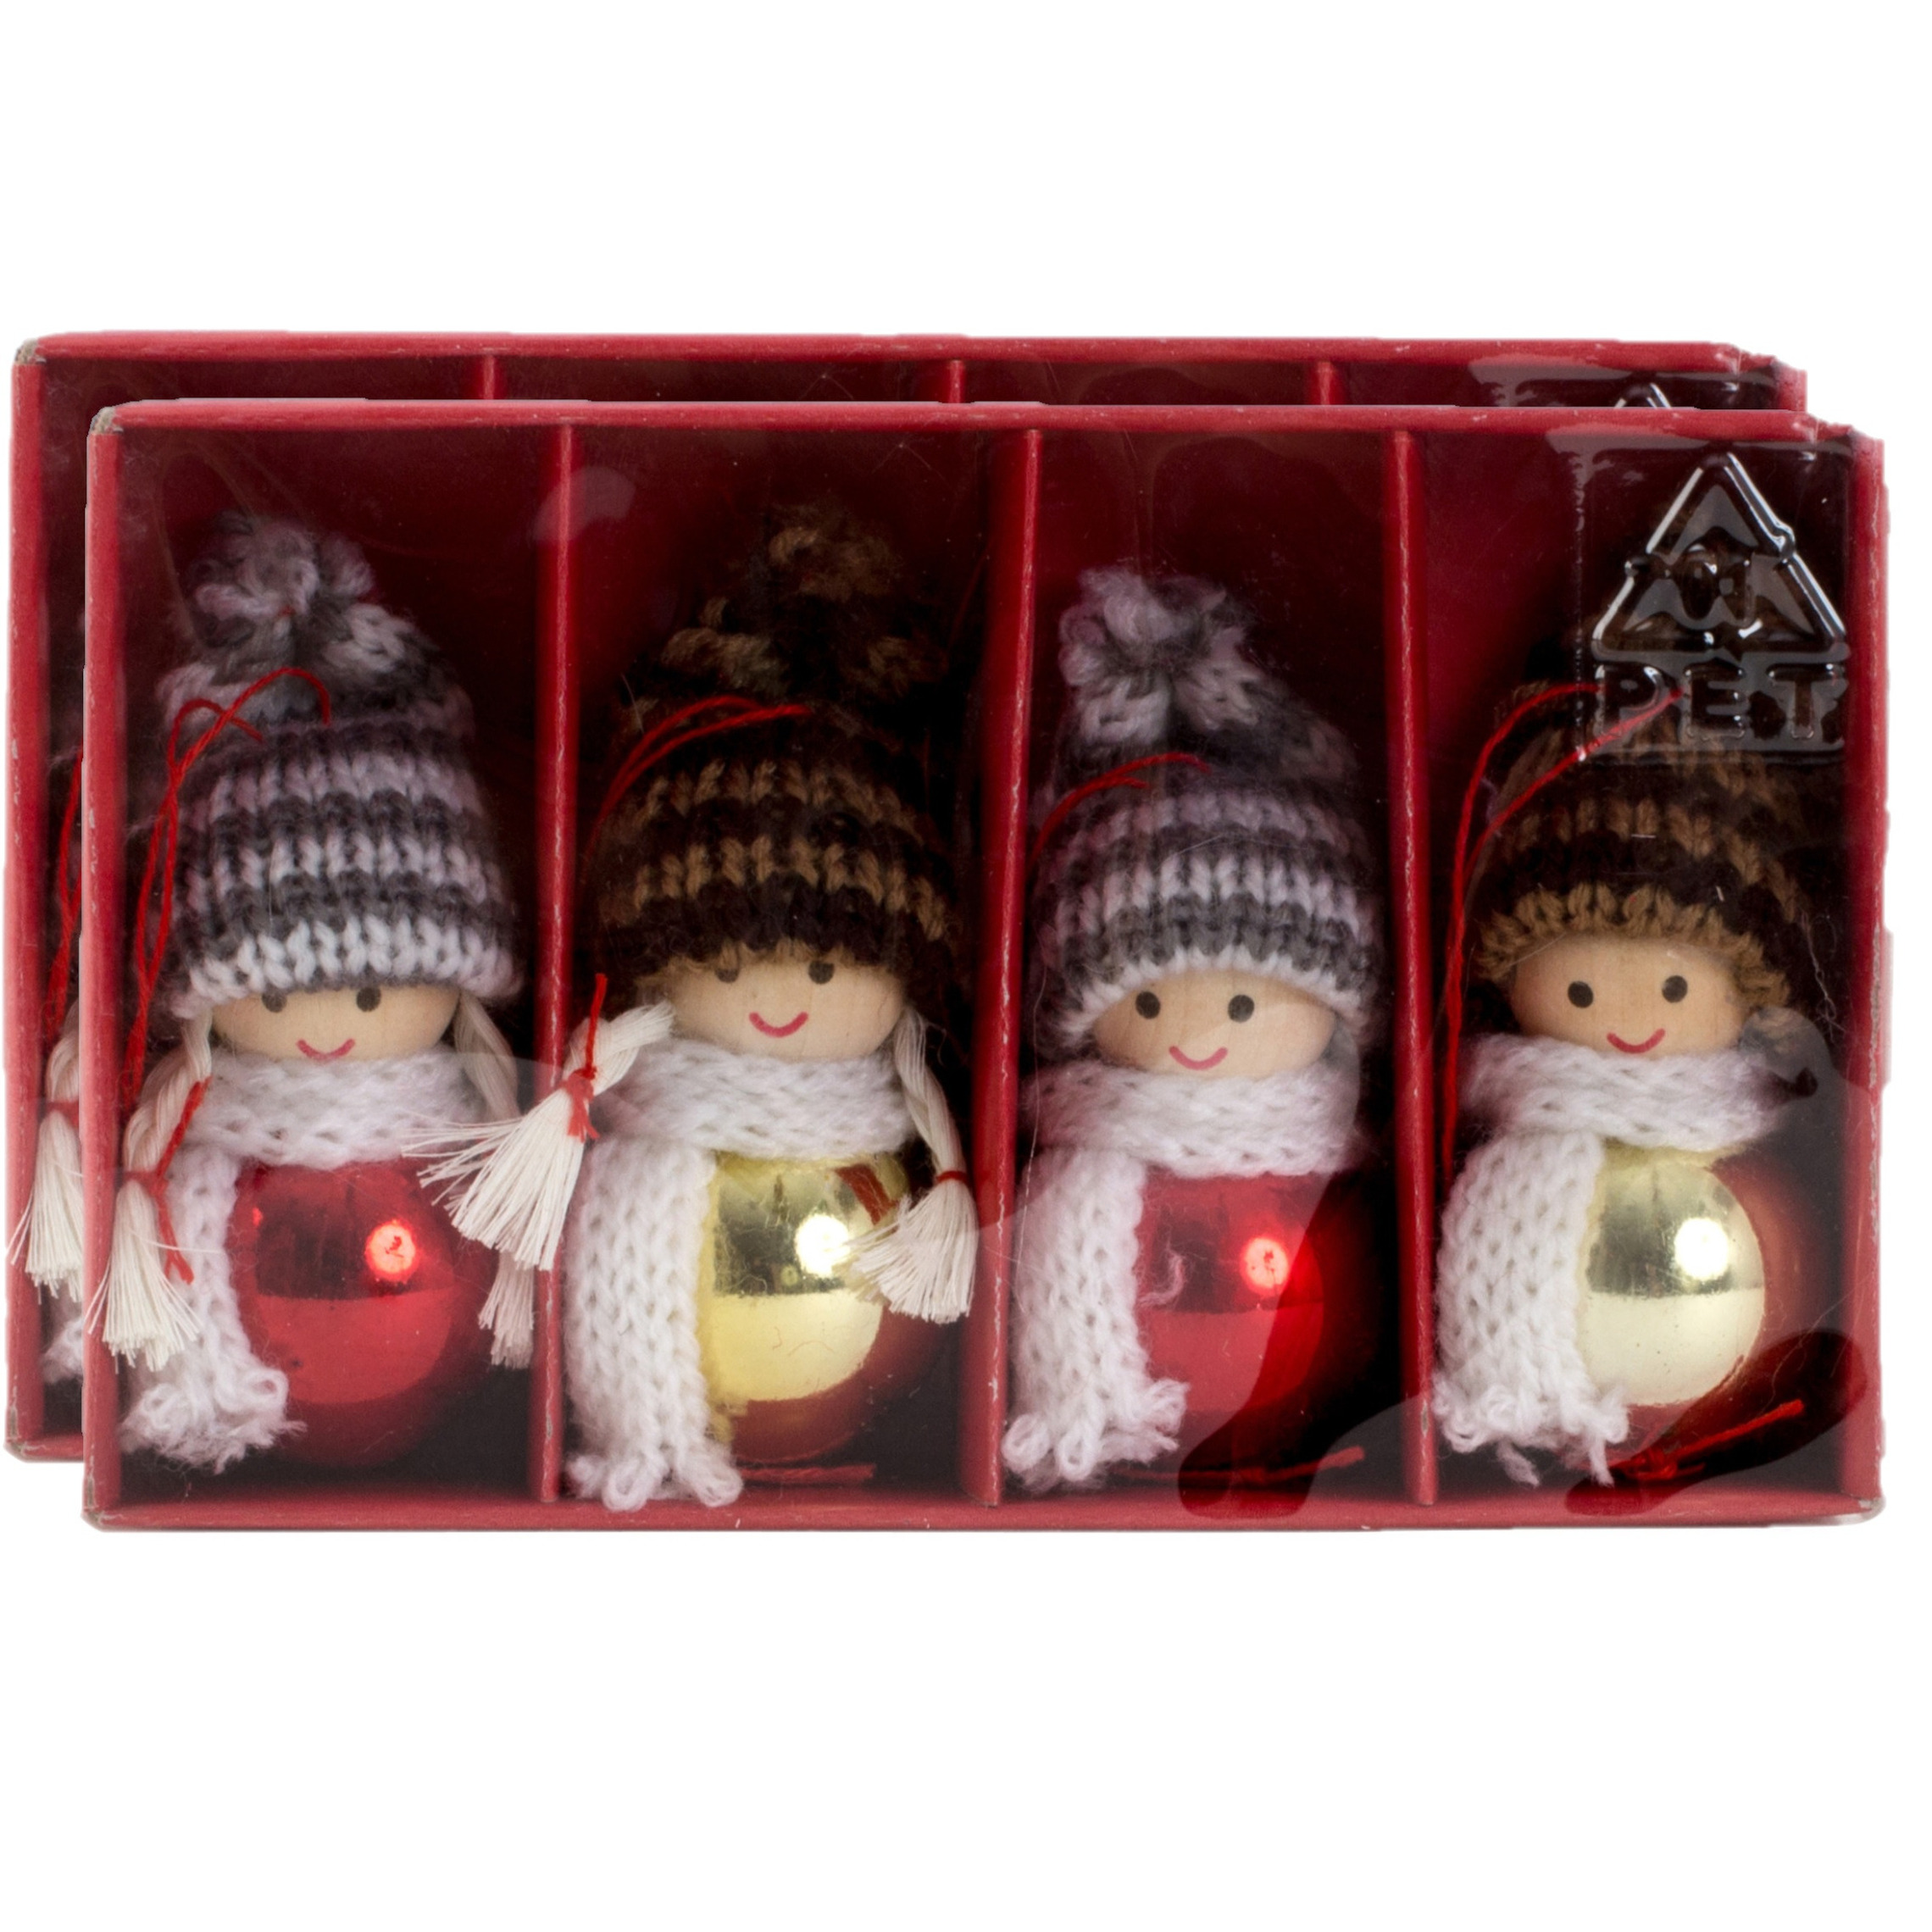 IKO kersthangers-kerstballen -poppetjes- gekleurd 8x hout